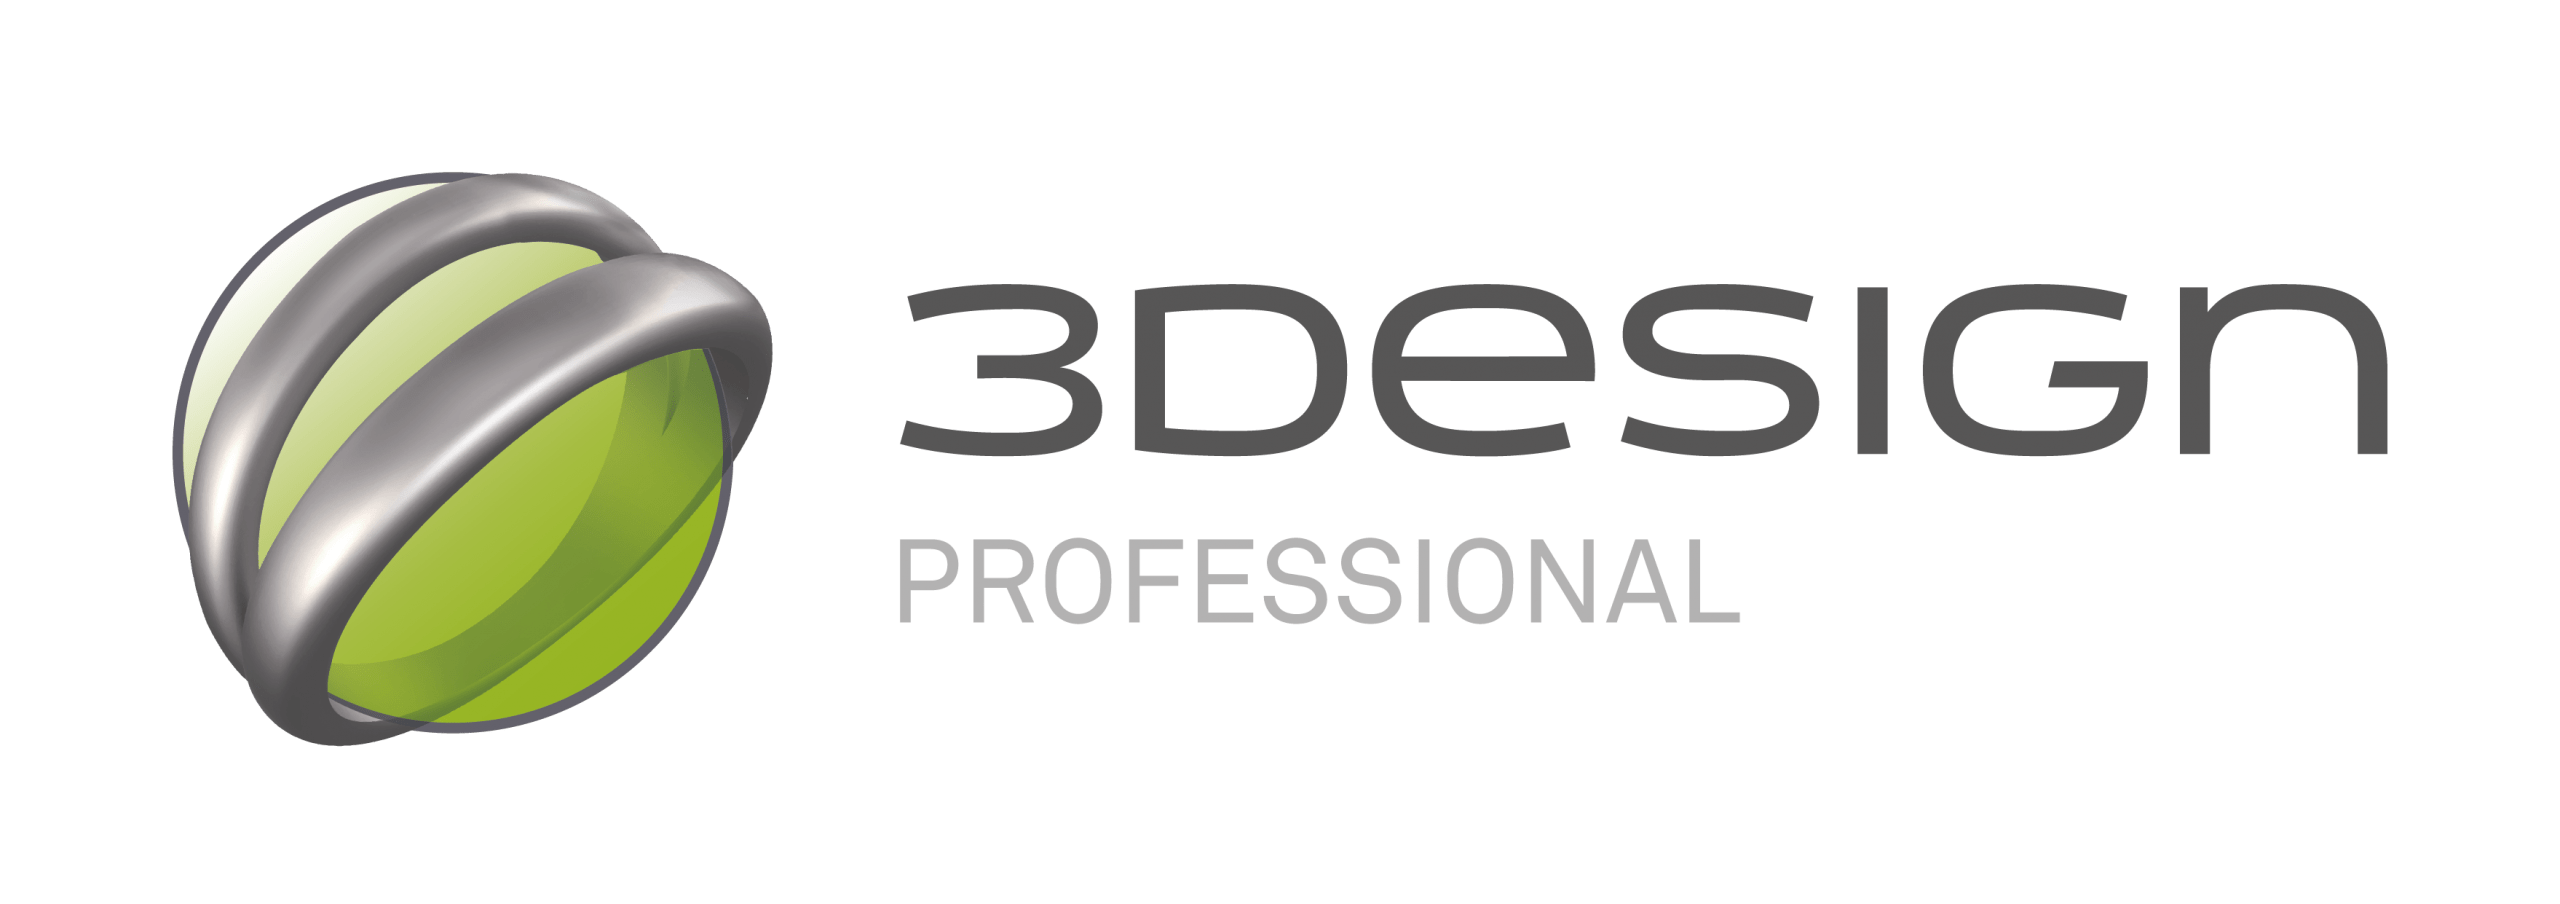 3Design Logo Pro